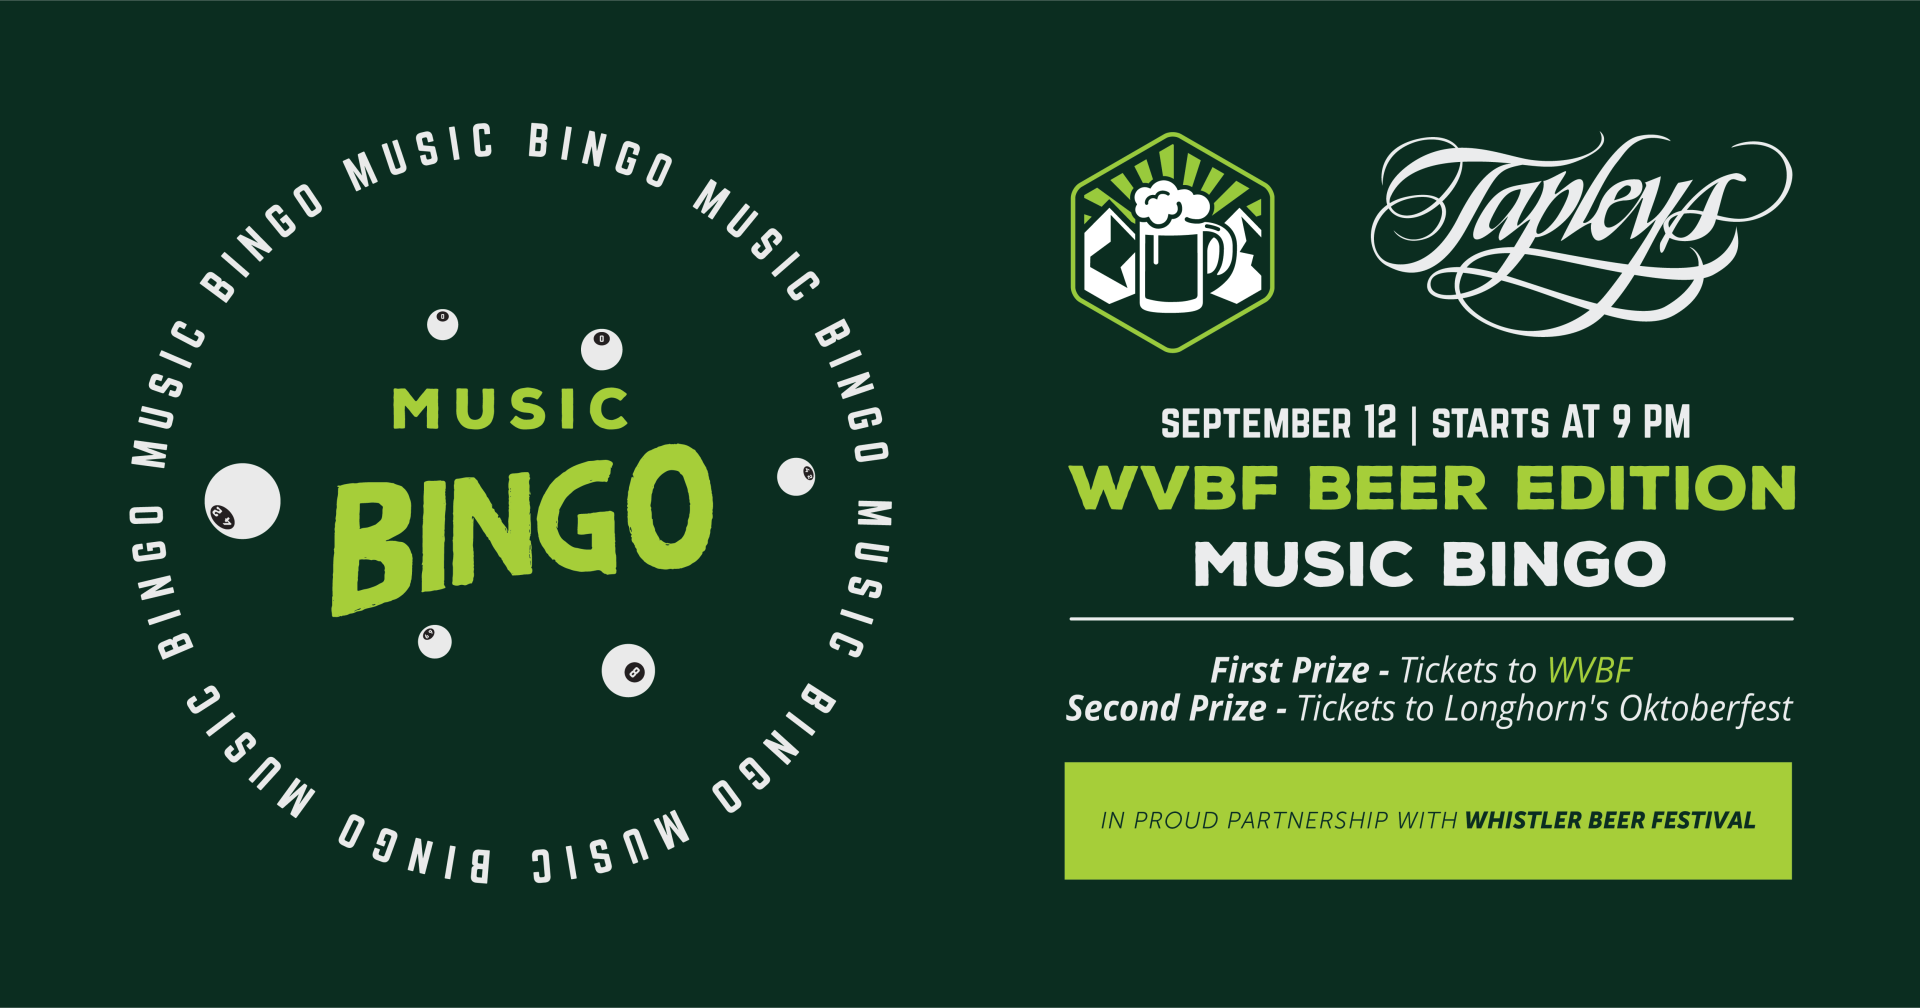 WVBF Beer Edition Music Bingo